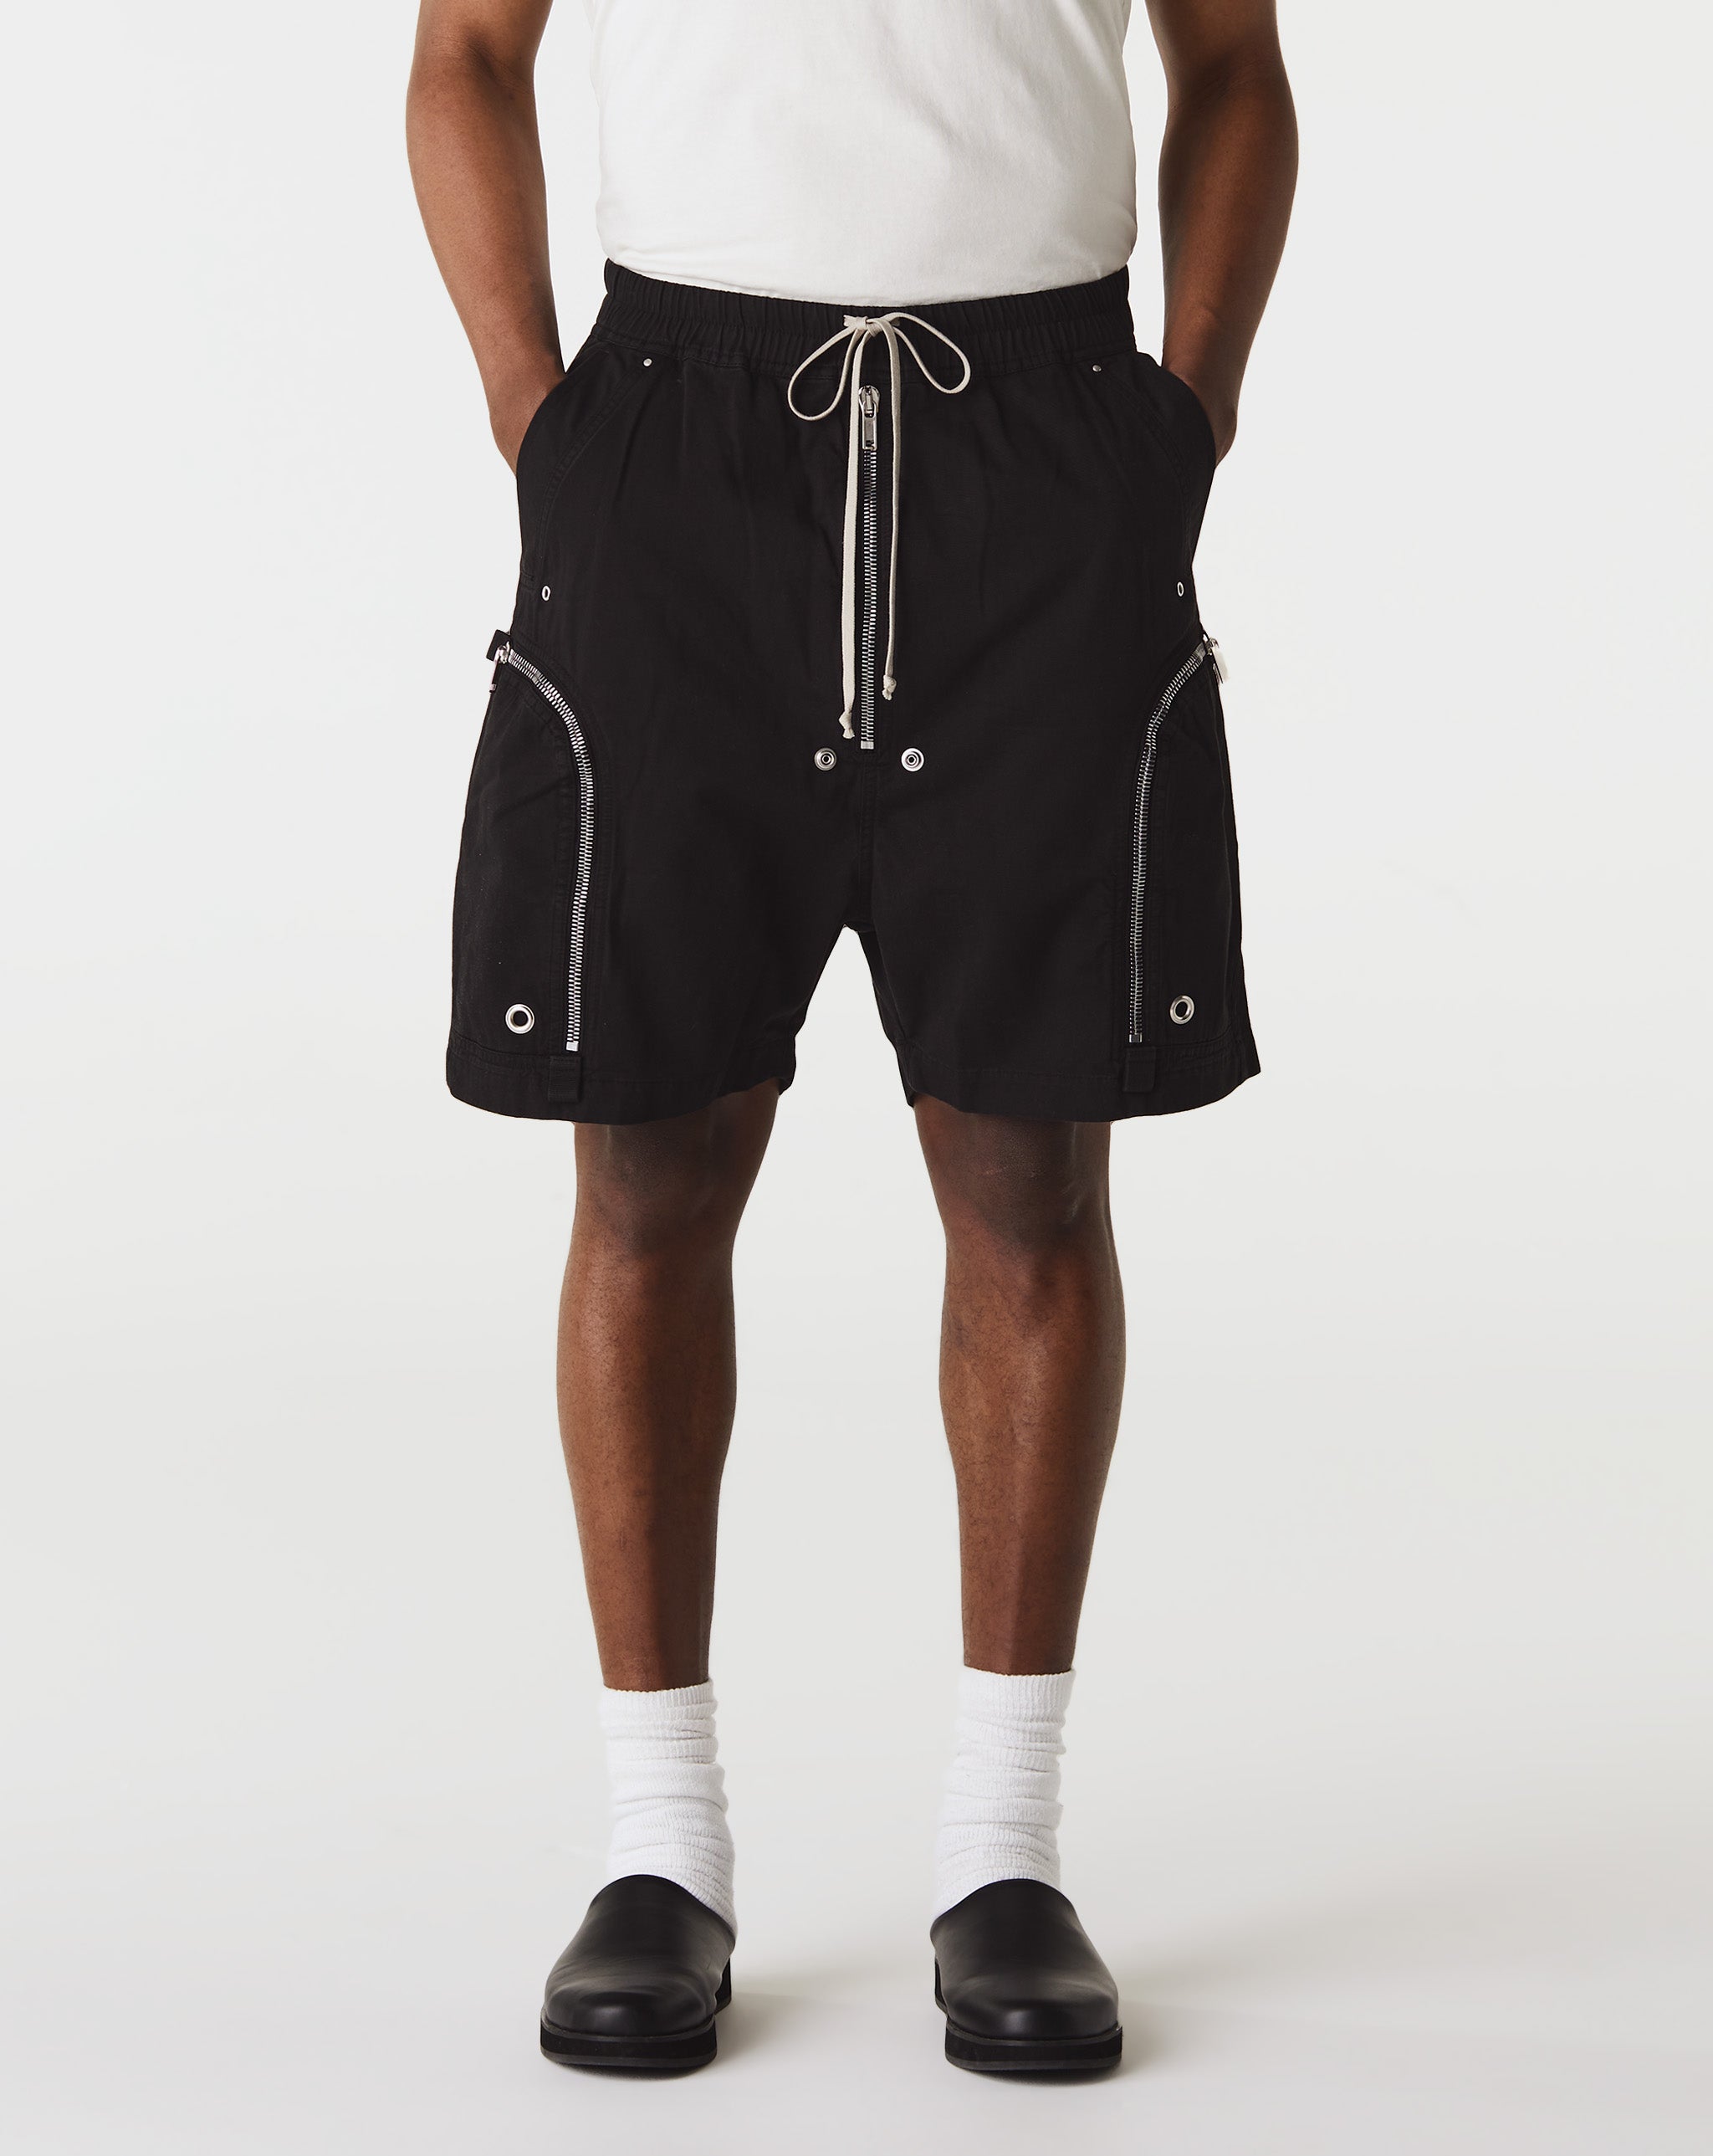 Camo Painter Pants Bauhaus Shorts  - Cheap 127-0 Jordan outlet